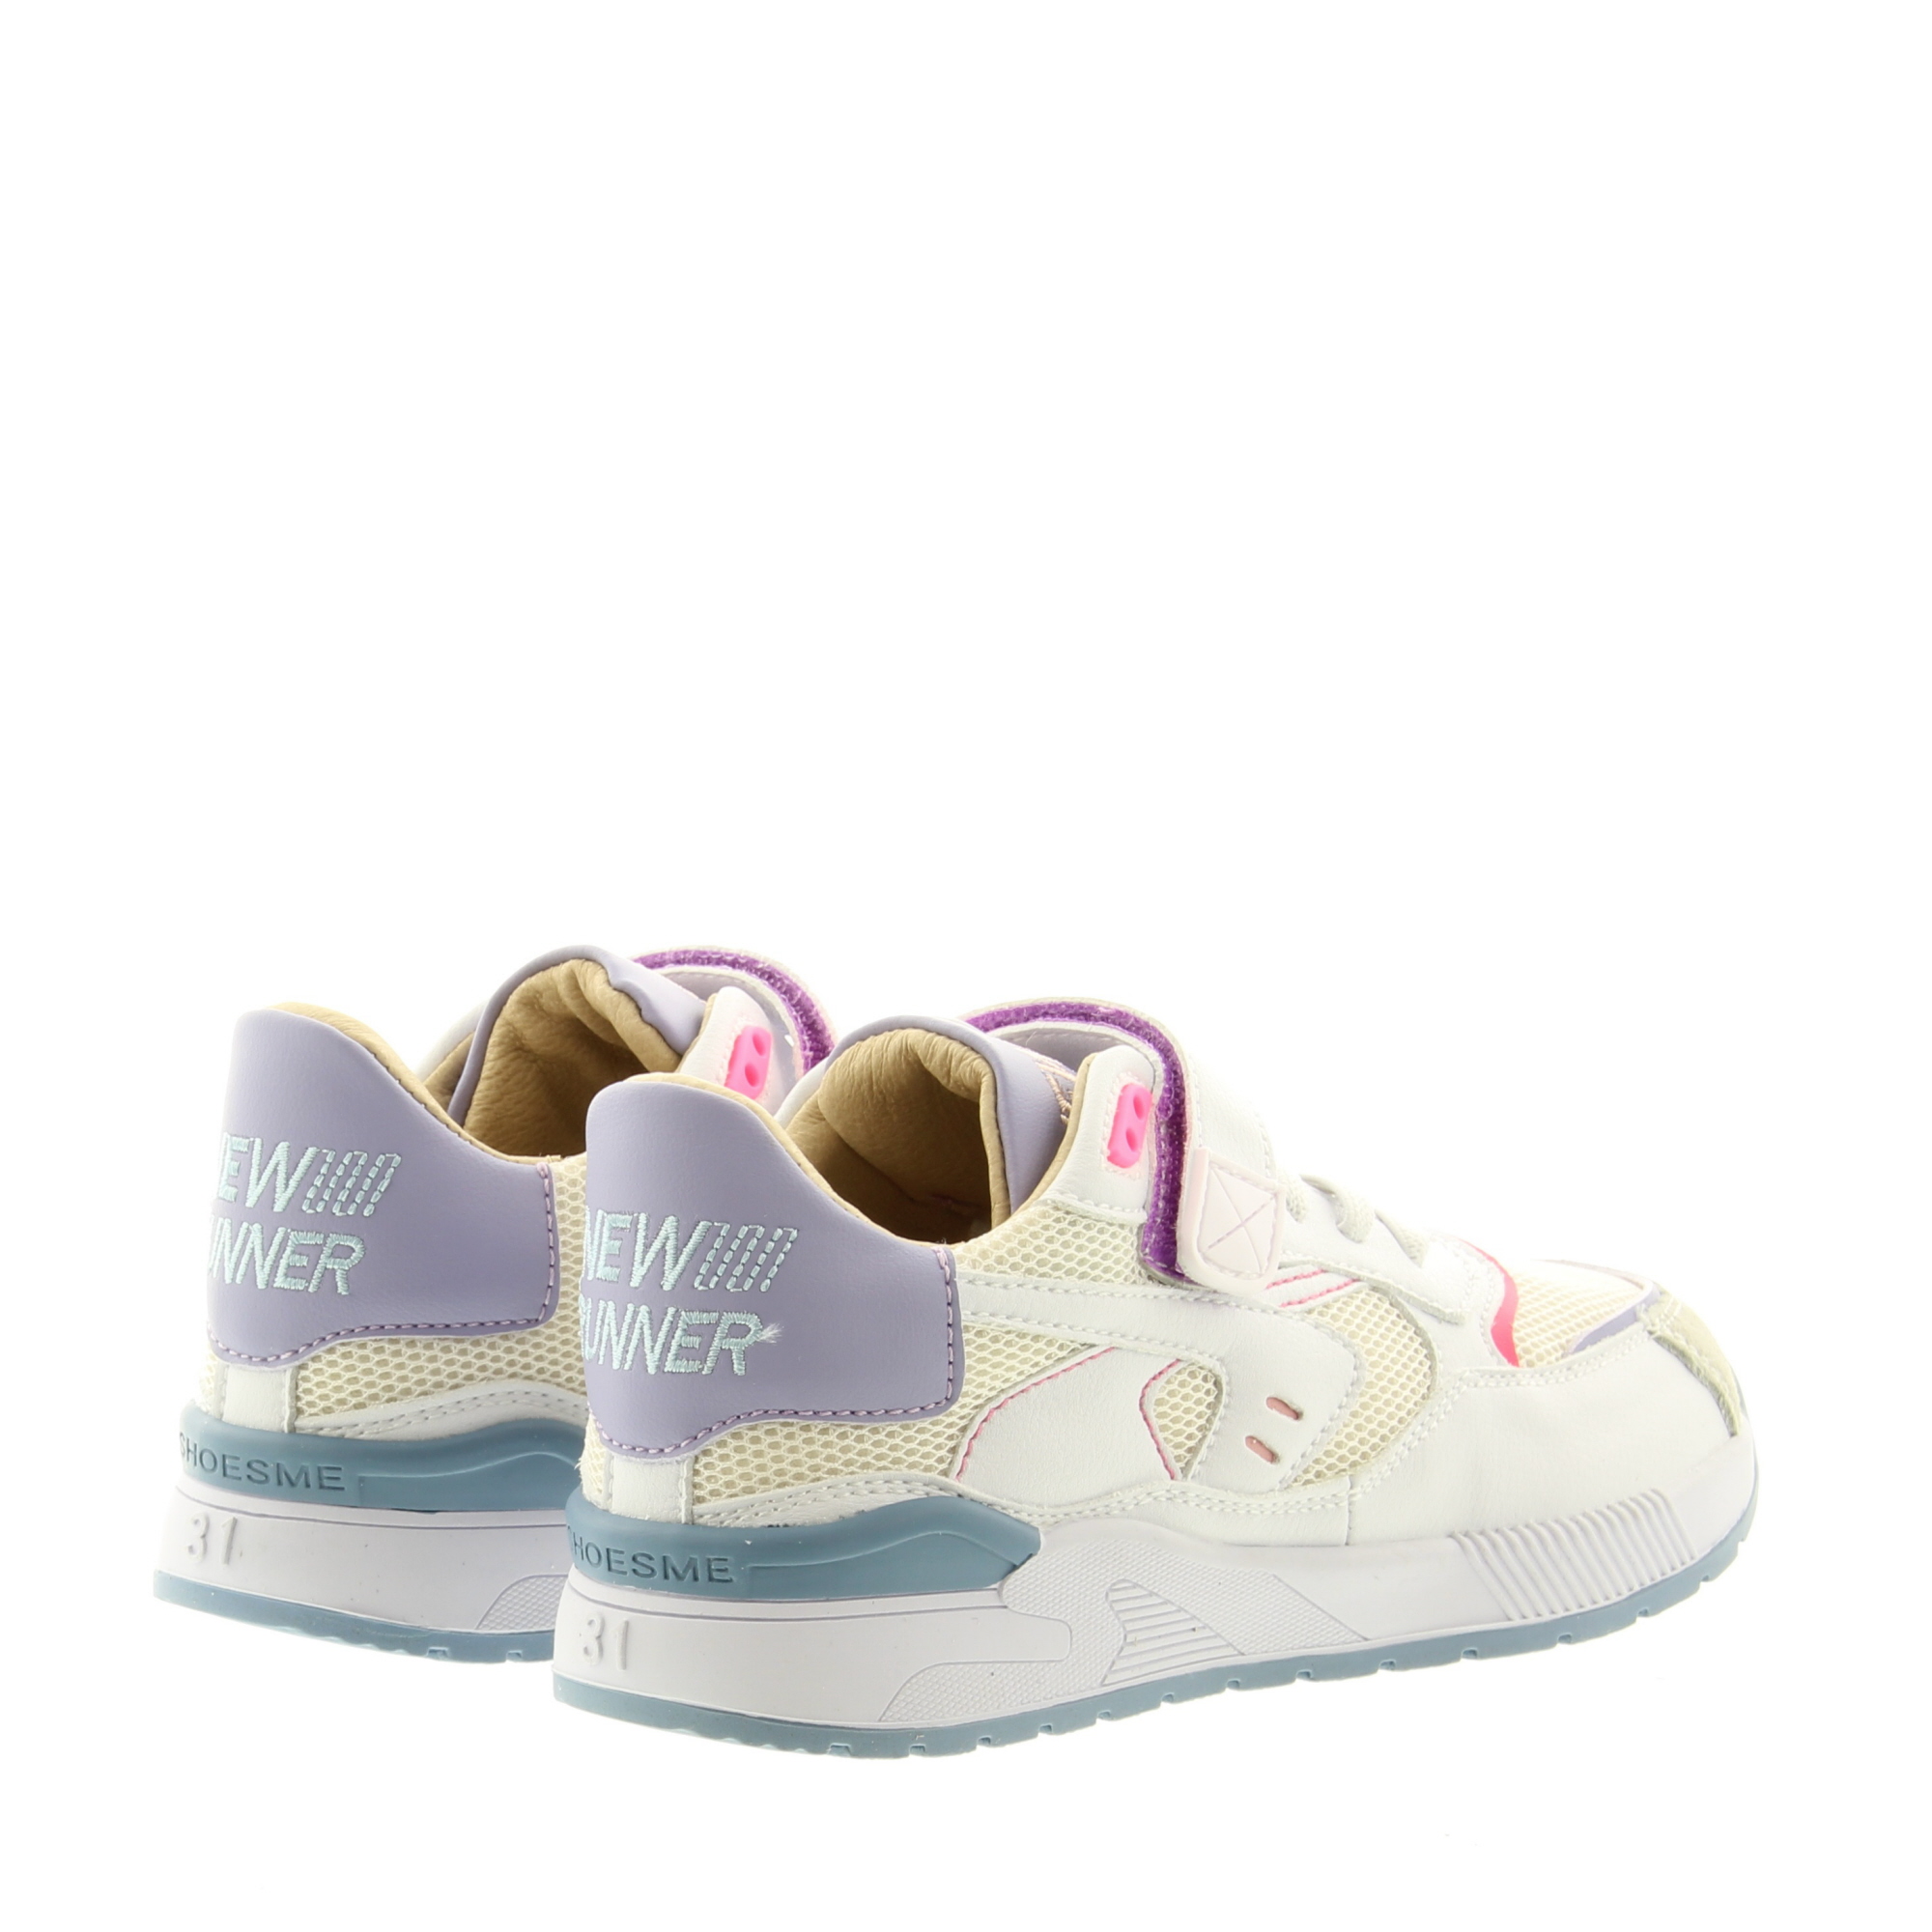 ShoesMe ST22S018-E White Lilac Fuchsia